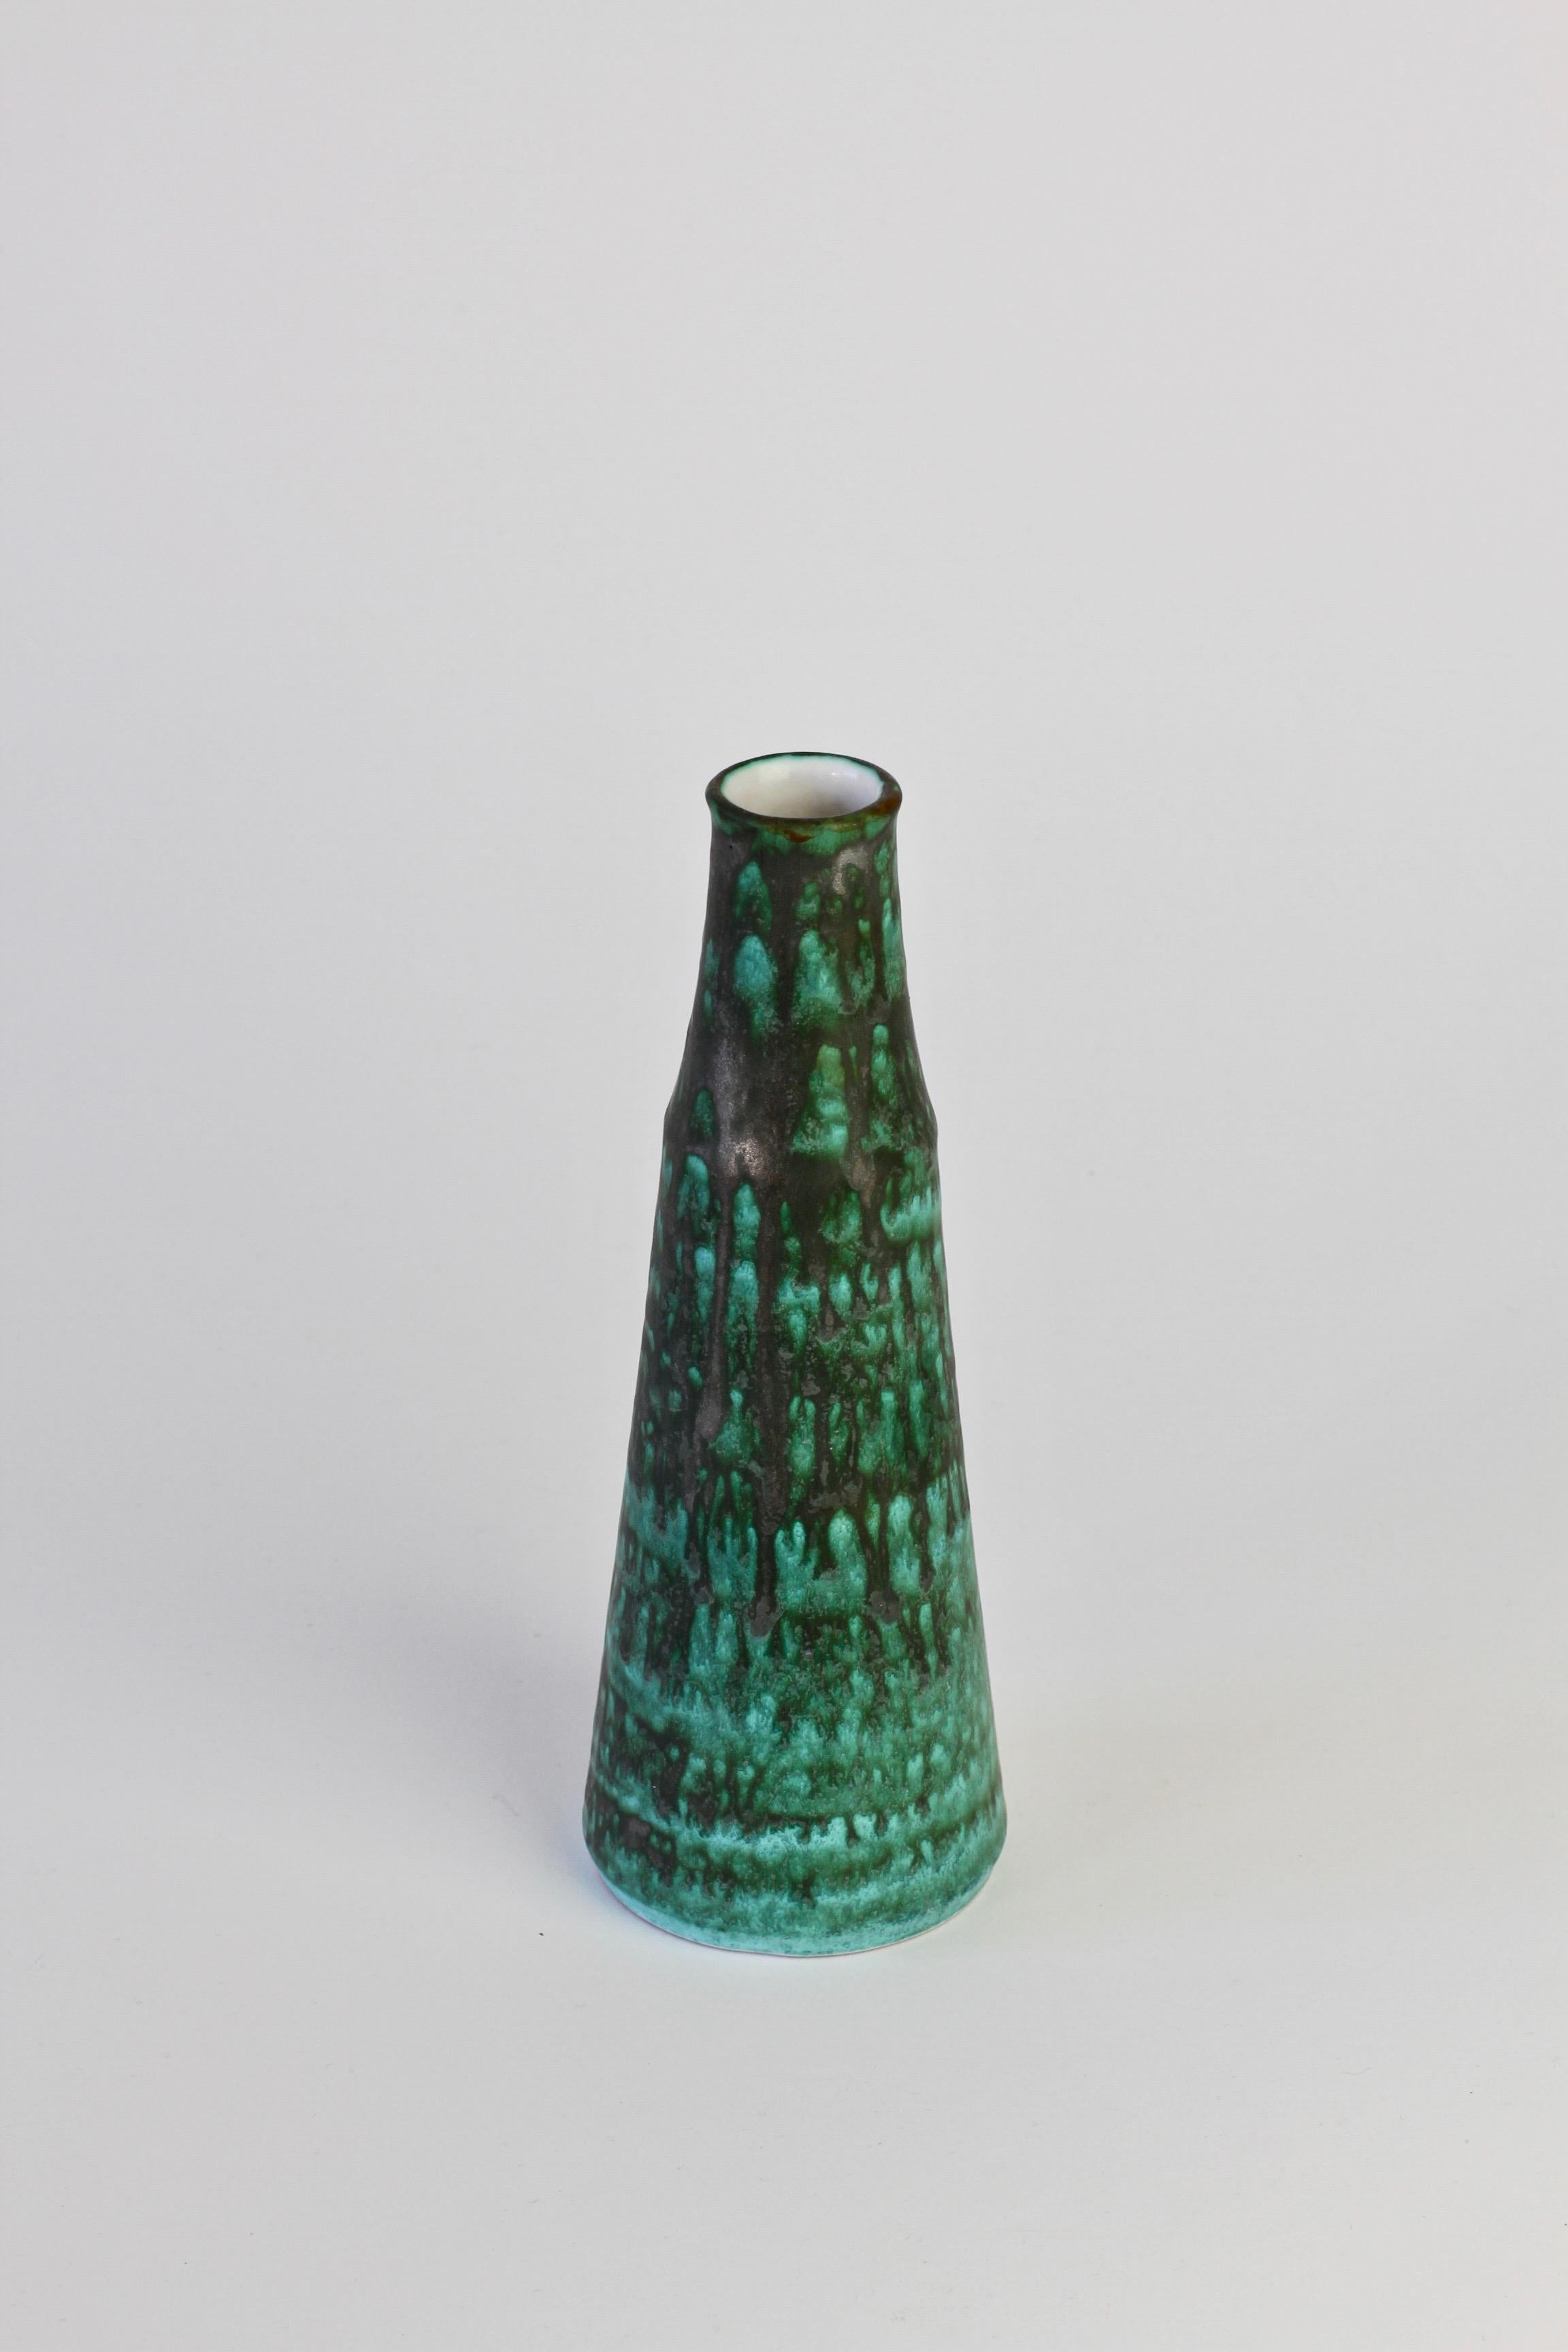 Mid-Century Modern Vintage Midcentury Green and Graphite Glazed Vase by Waechtersbach, 1950s For Sale